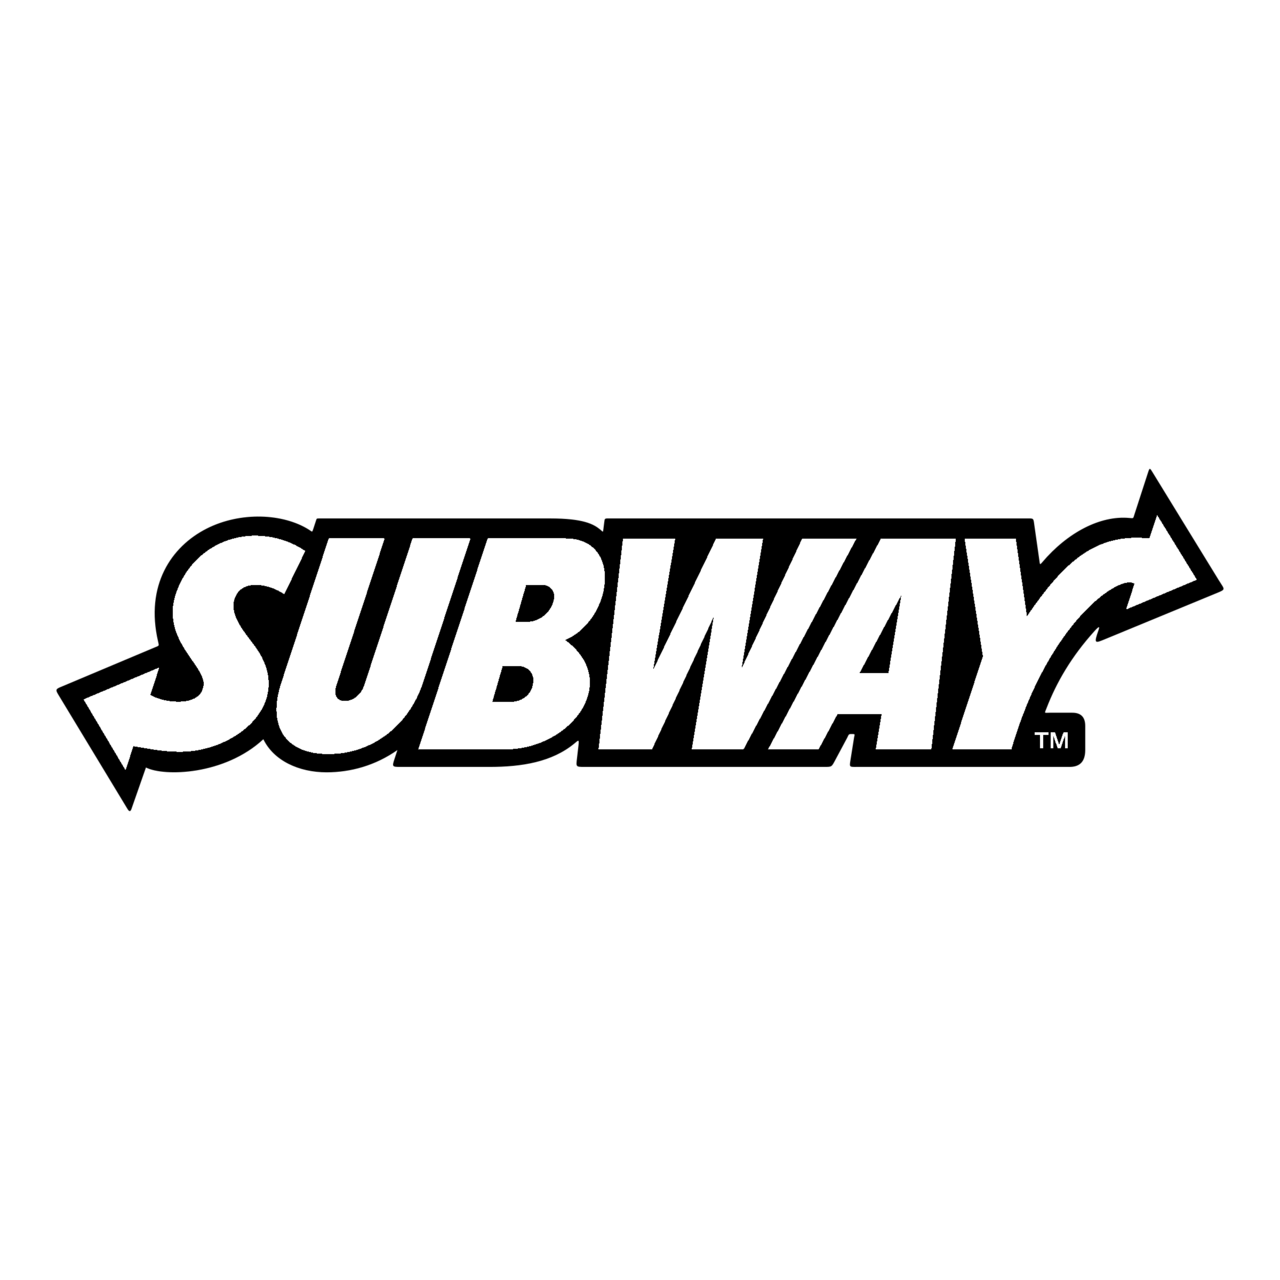 subway-logo-black-and-white-4